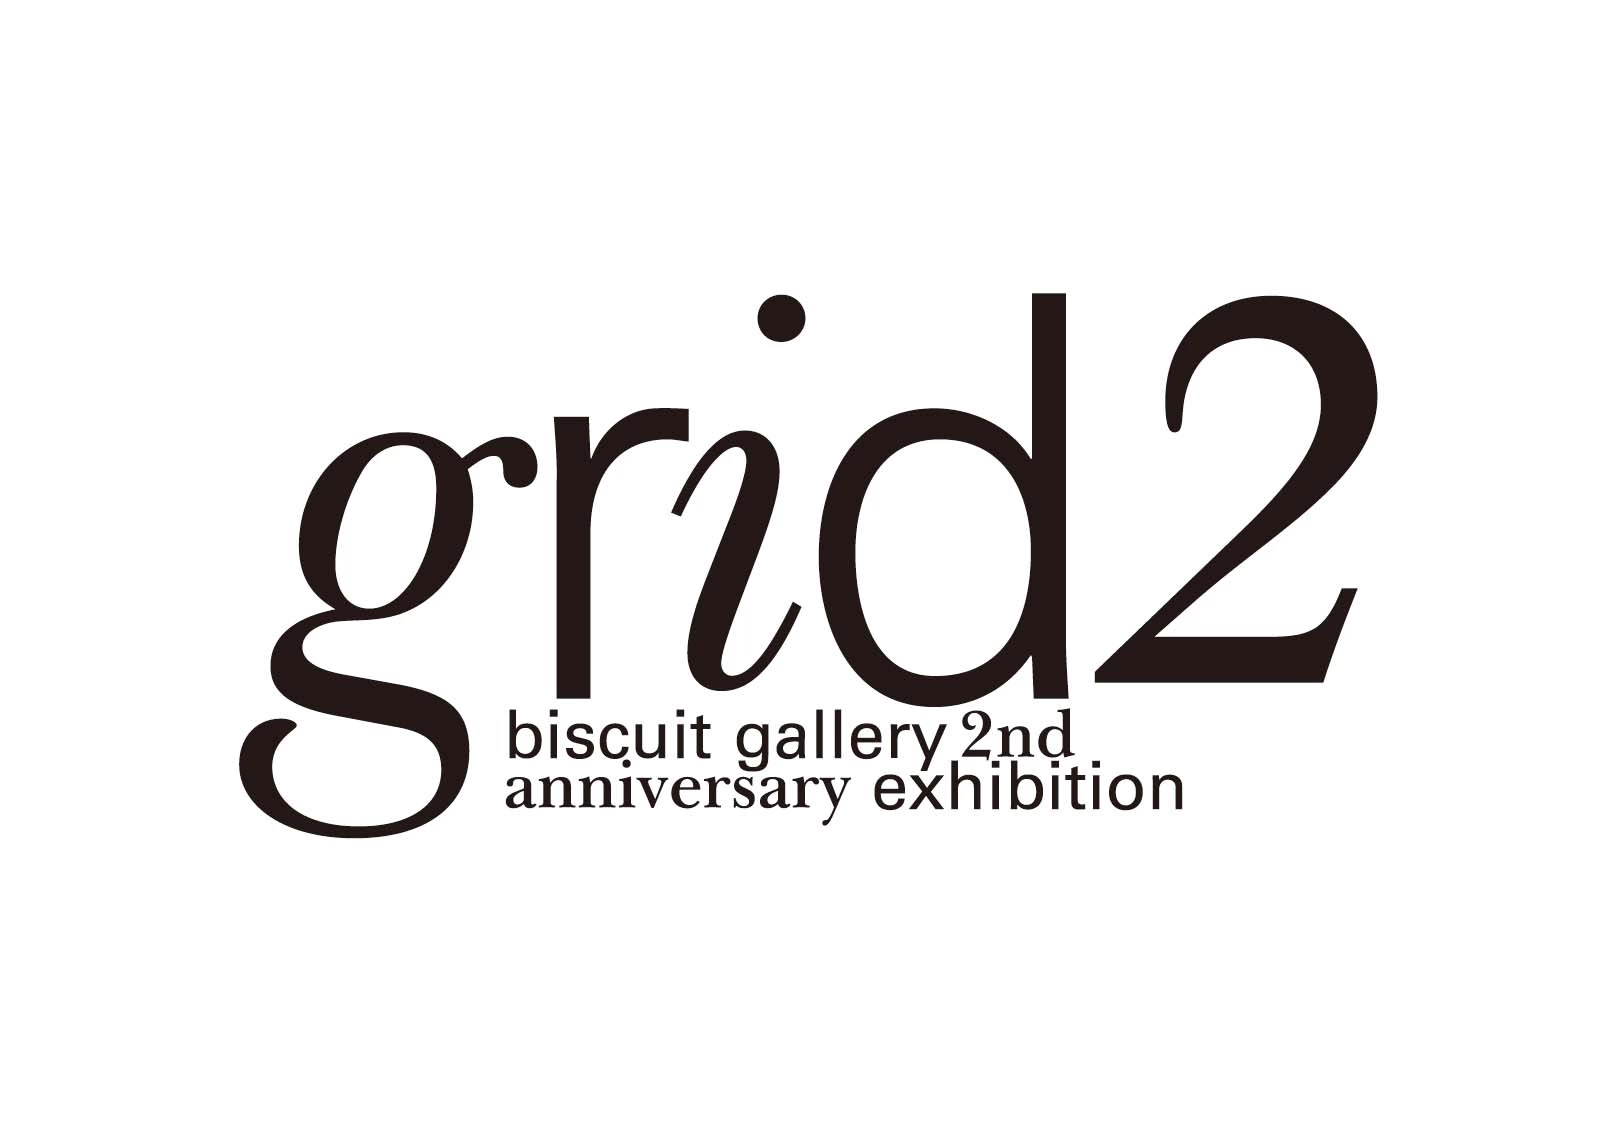 biscuit gallery 2nd anniversary exhibition「grid2」